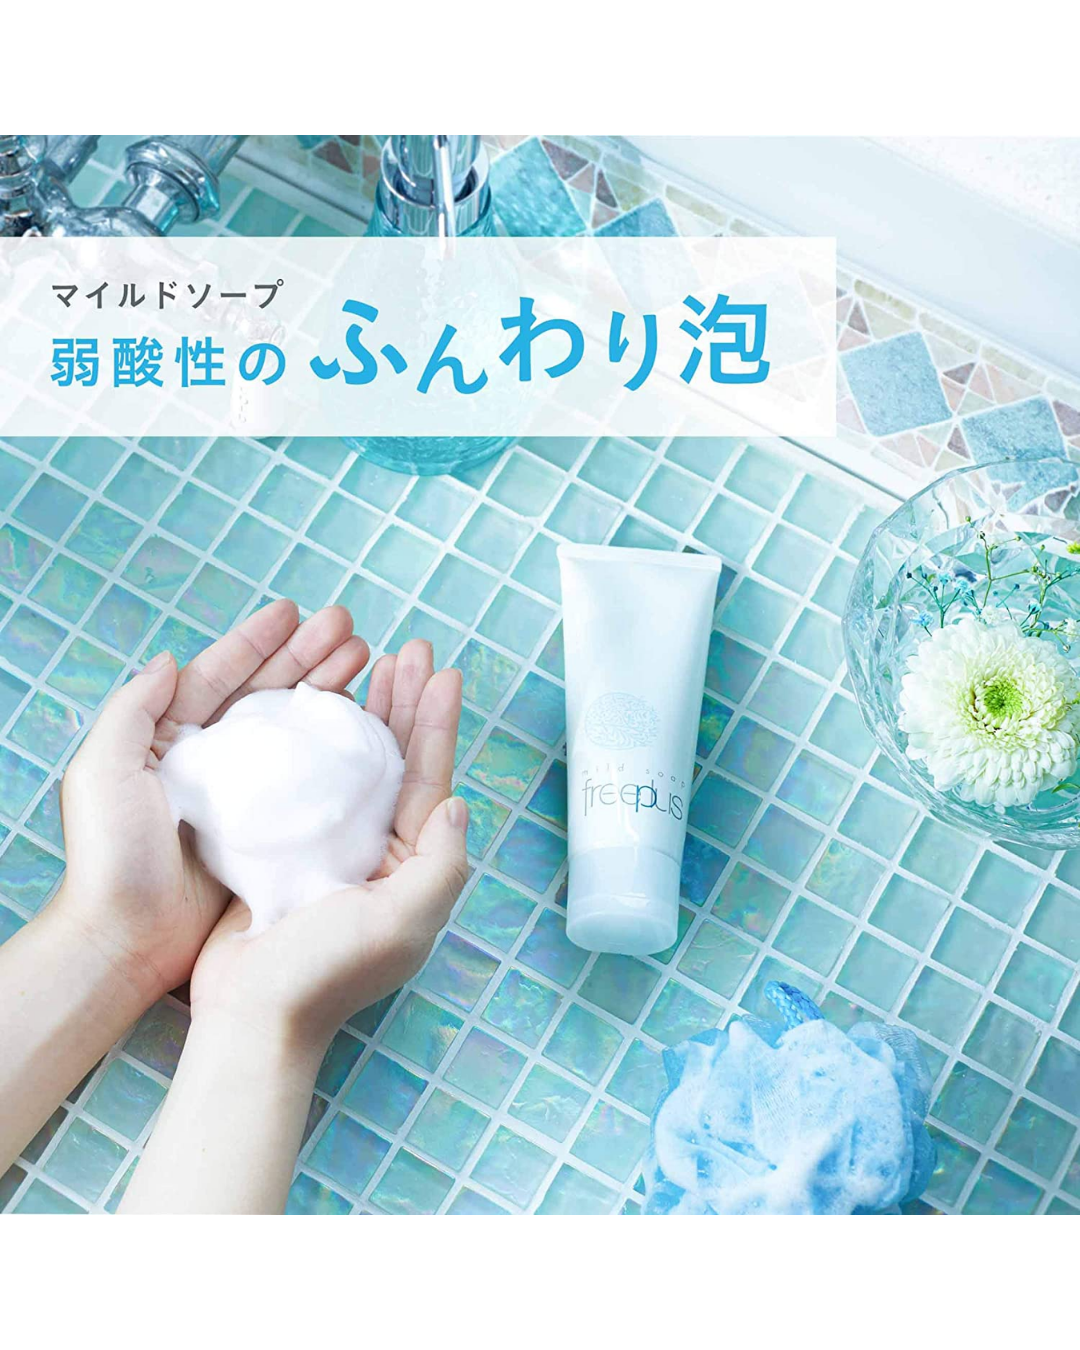 Kanebo Freeplus Mild Soap - Unique Bunny